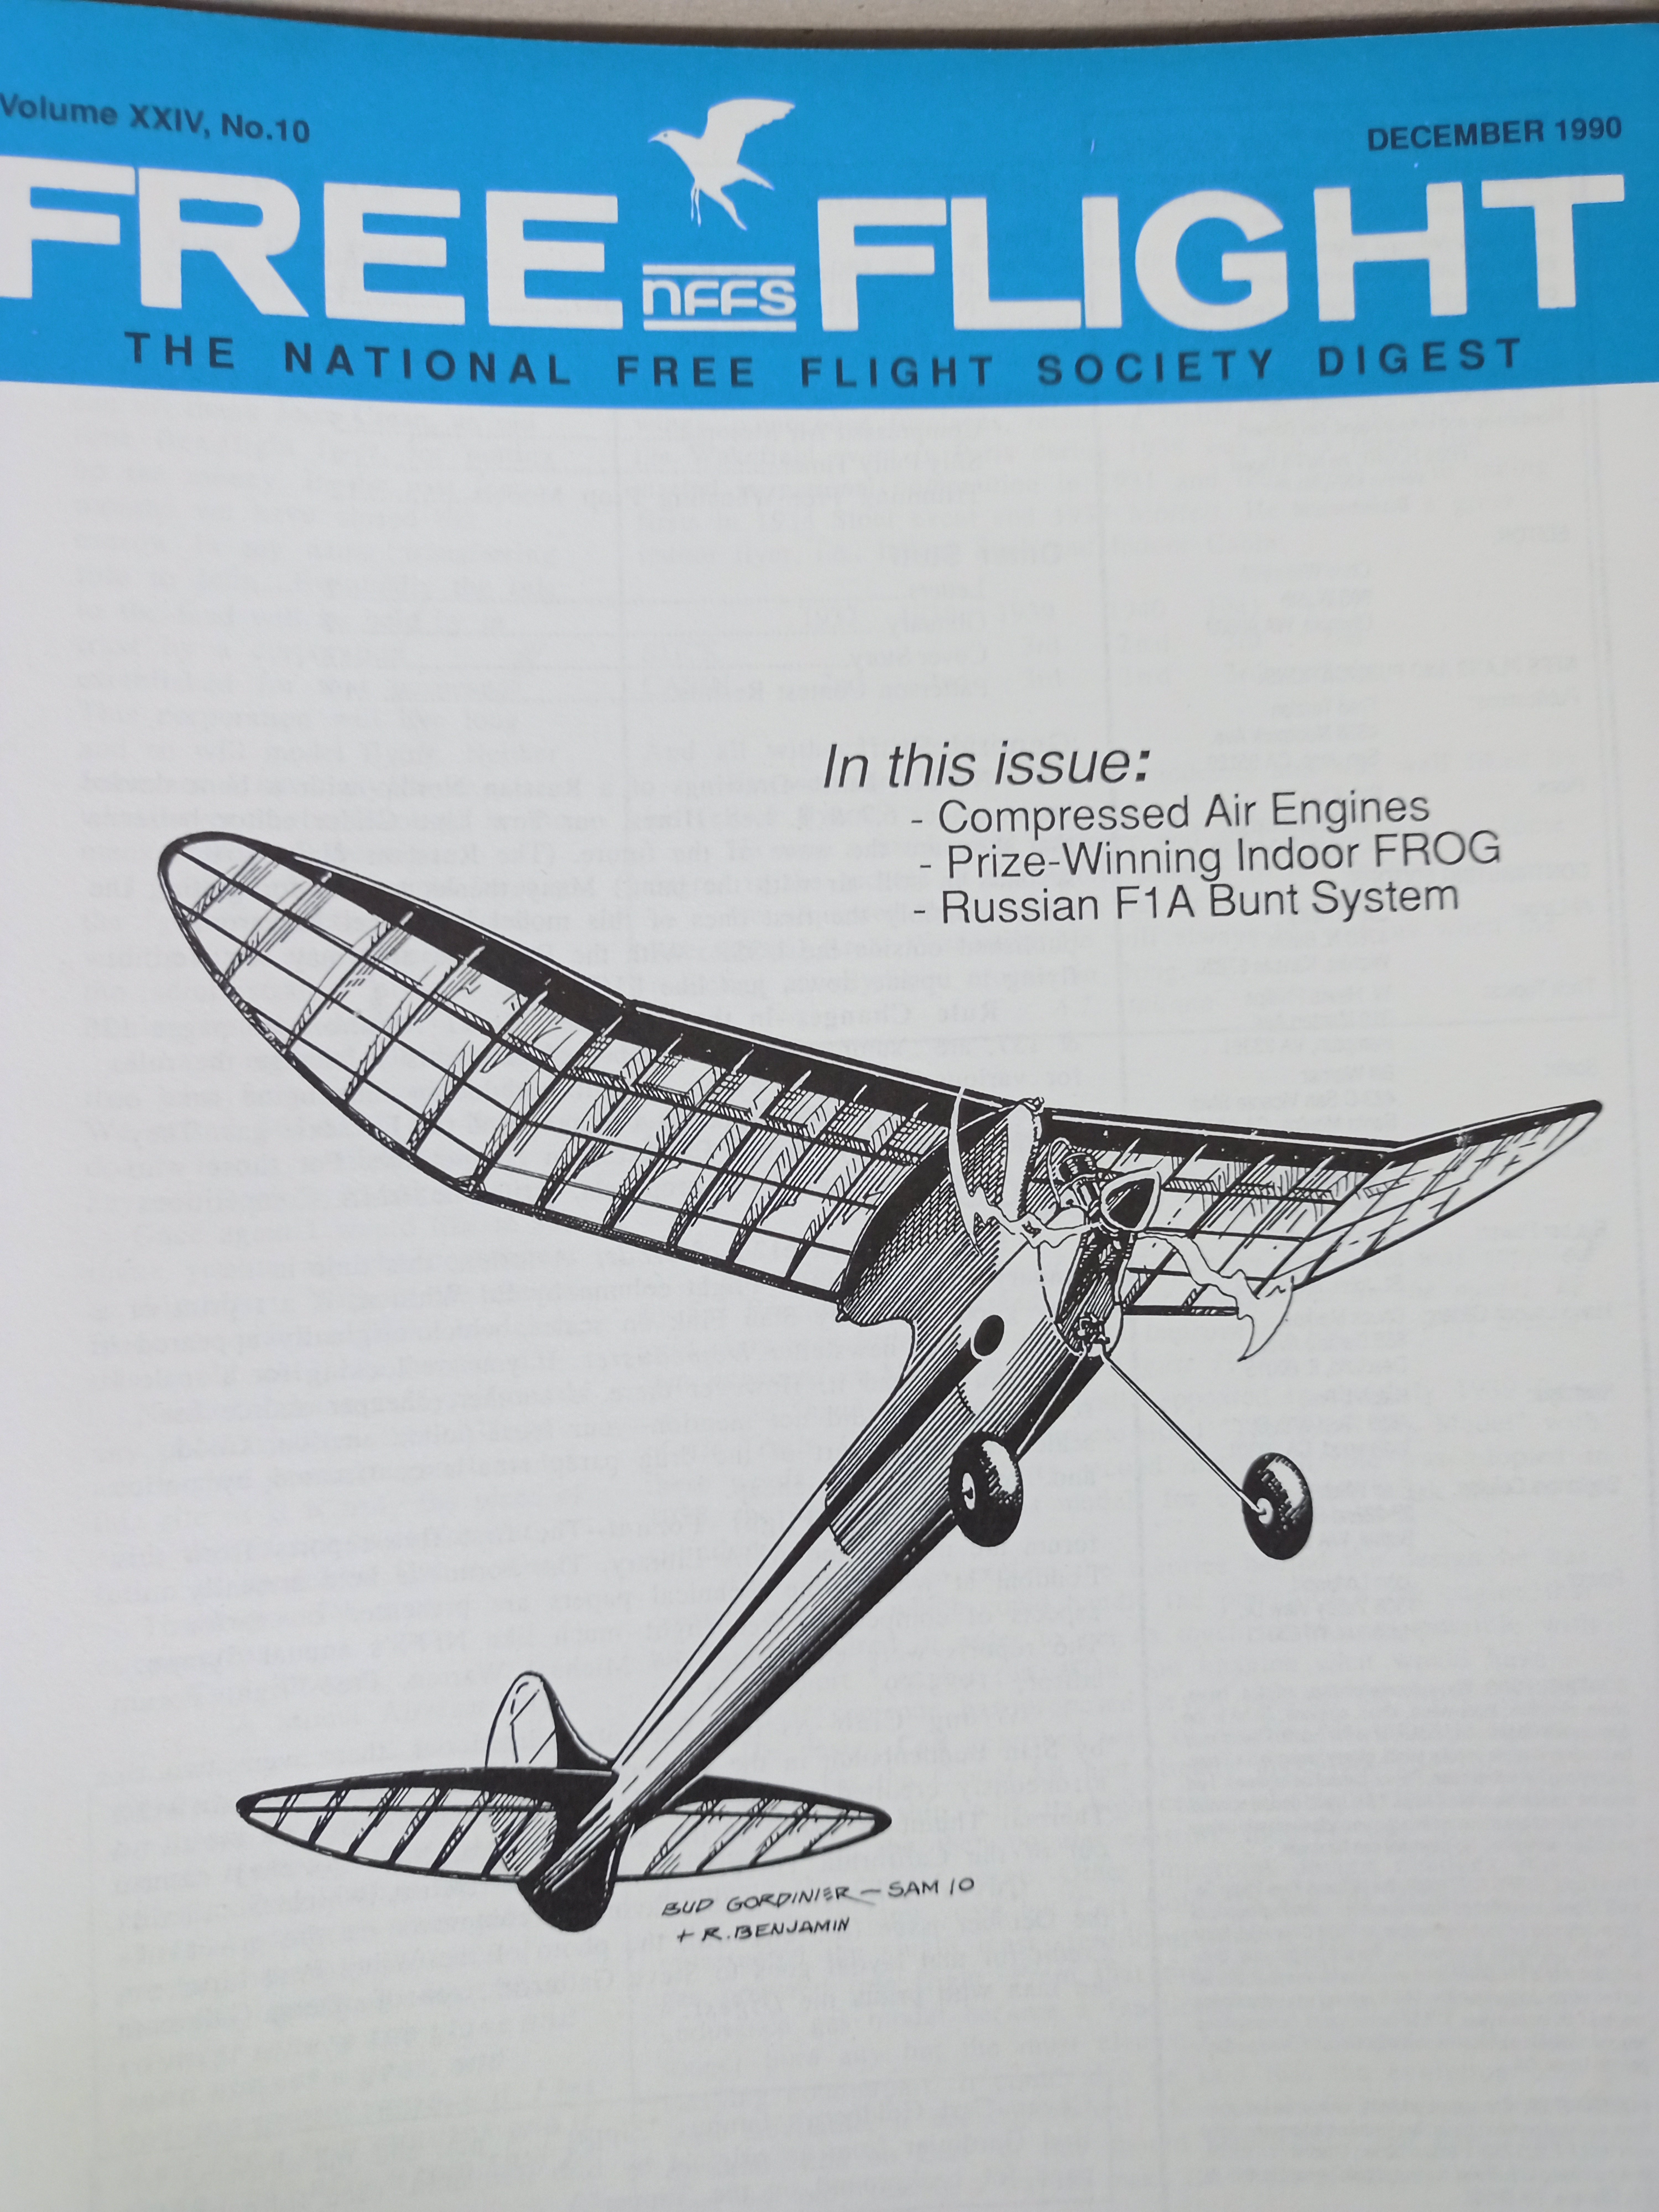 Freeflight (Deutsches Segelflugmuseum mit Modellflug CC BY-NC-SA)